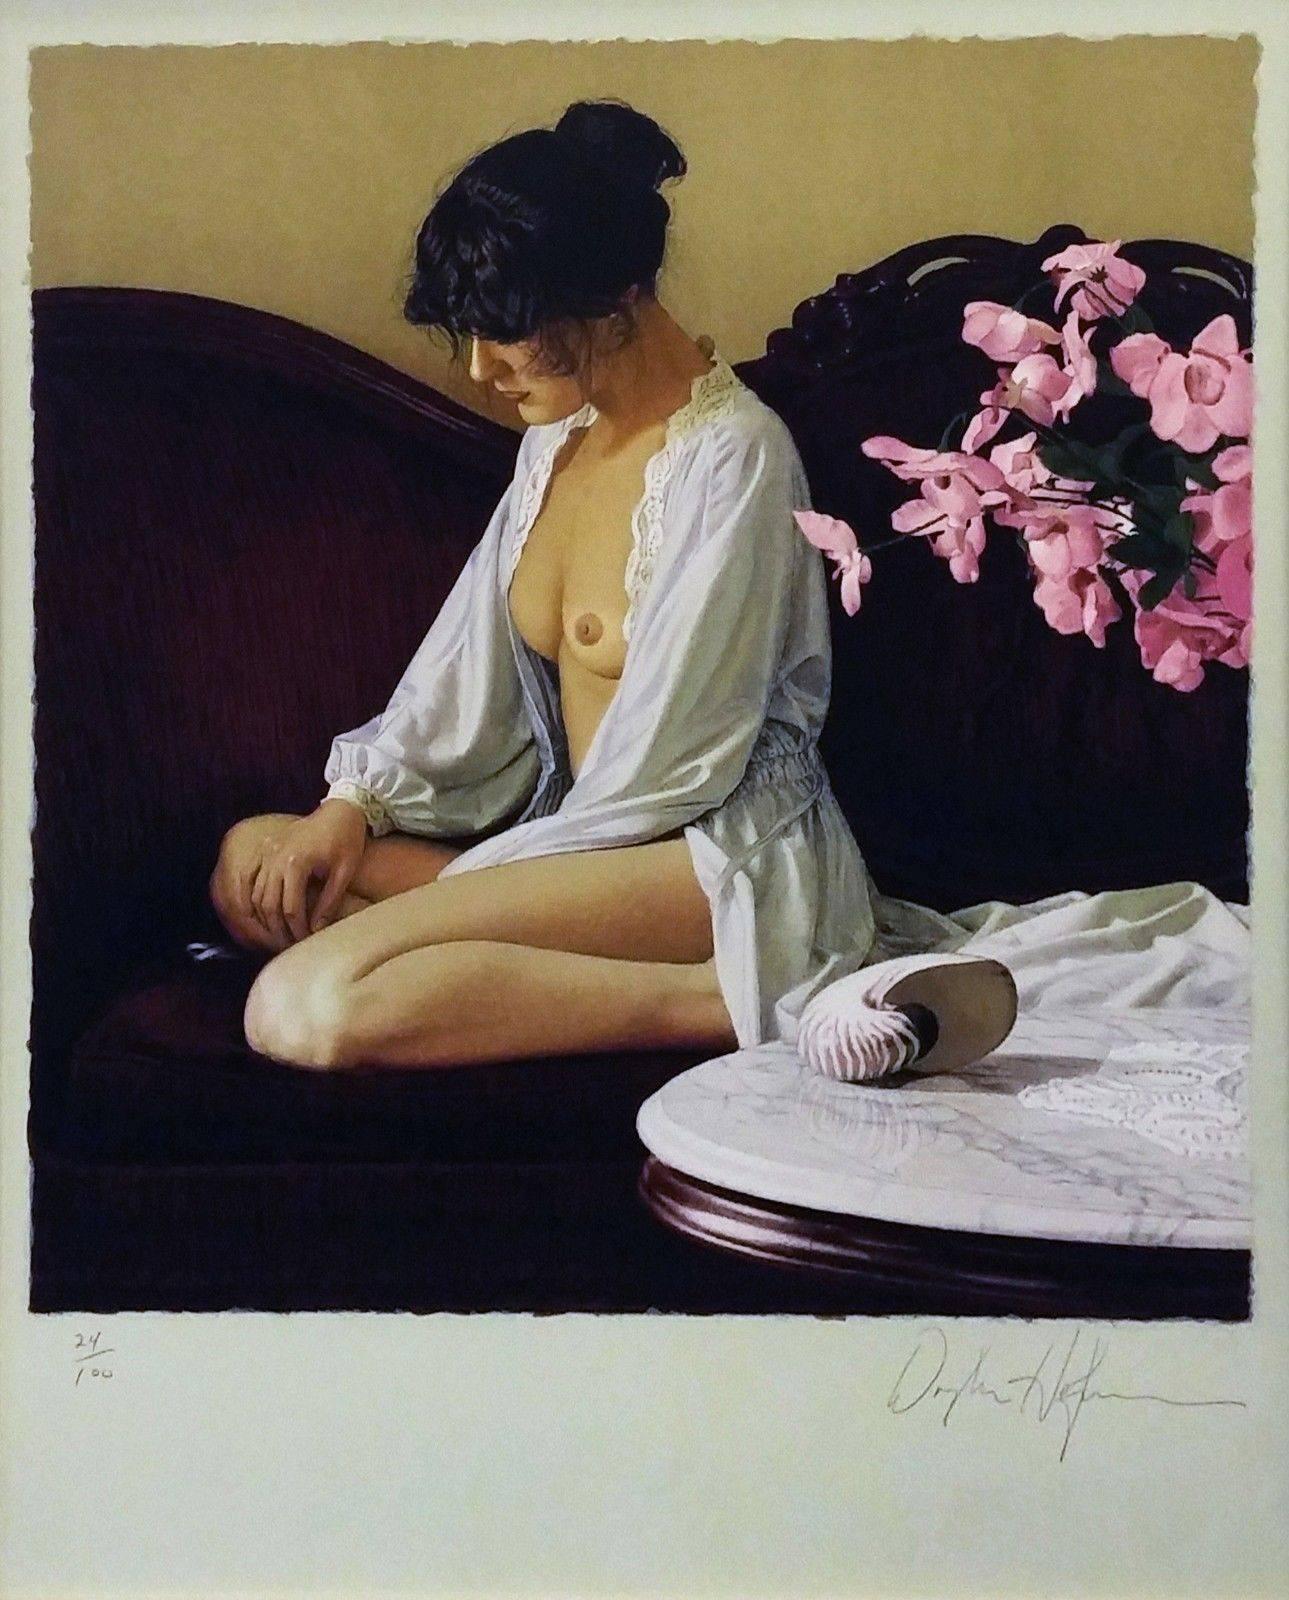 Douglas Hofmann Nude Print - PINK FLOWERS